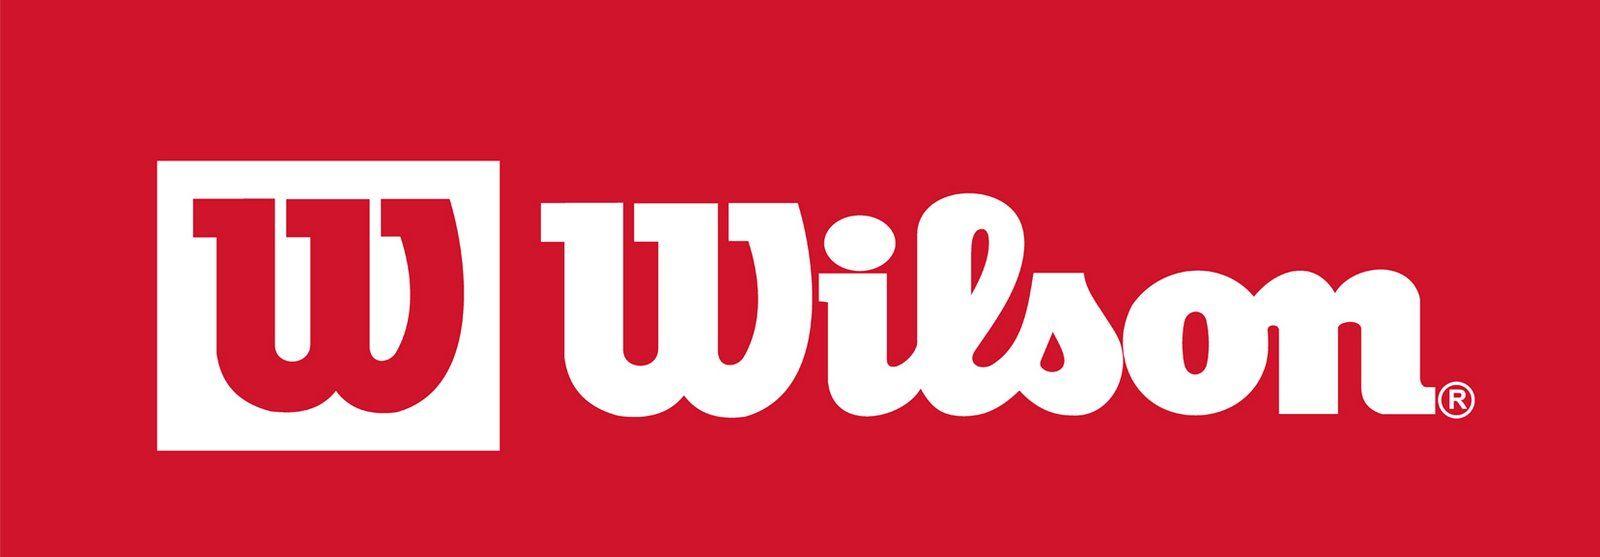 Wilson W Logo - soltay.1. Wilson Football Commodity Chain